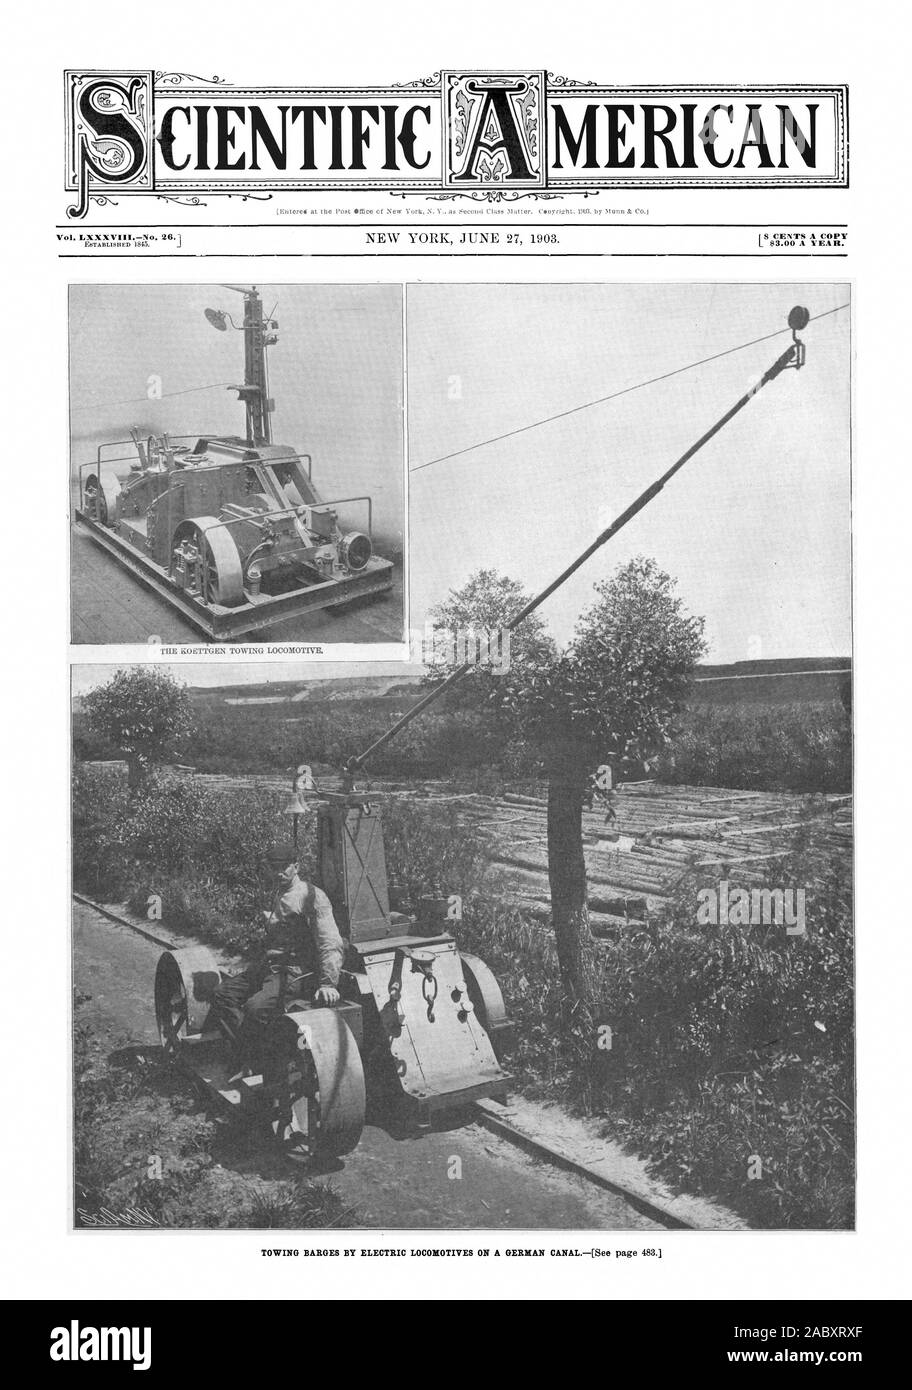 Vol. LXXXVIIINo. 26.1, scientific american, 1903-06-27 Stock Photo